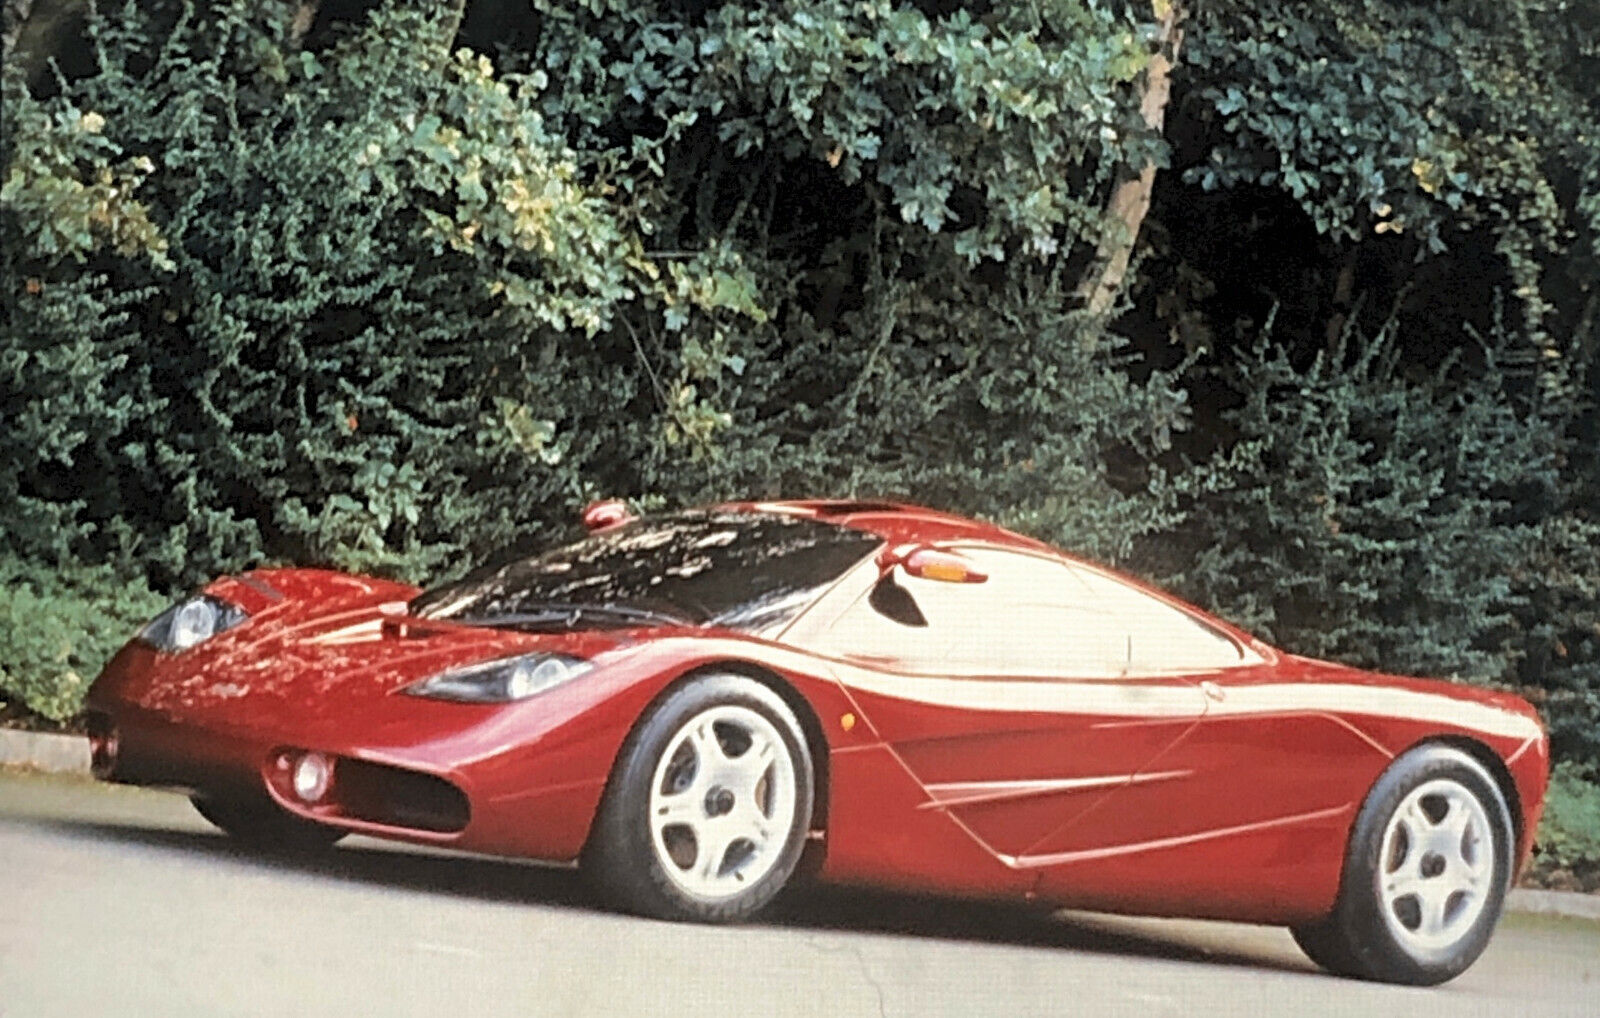 McLaren F1 Supercar 35MM Photo Slide - Photograph Image - 1990s 